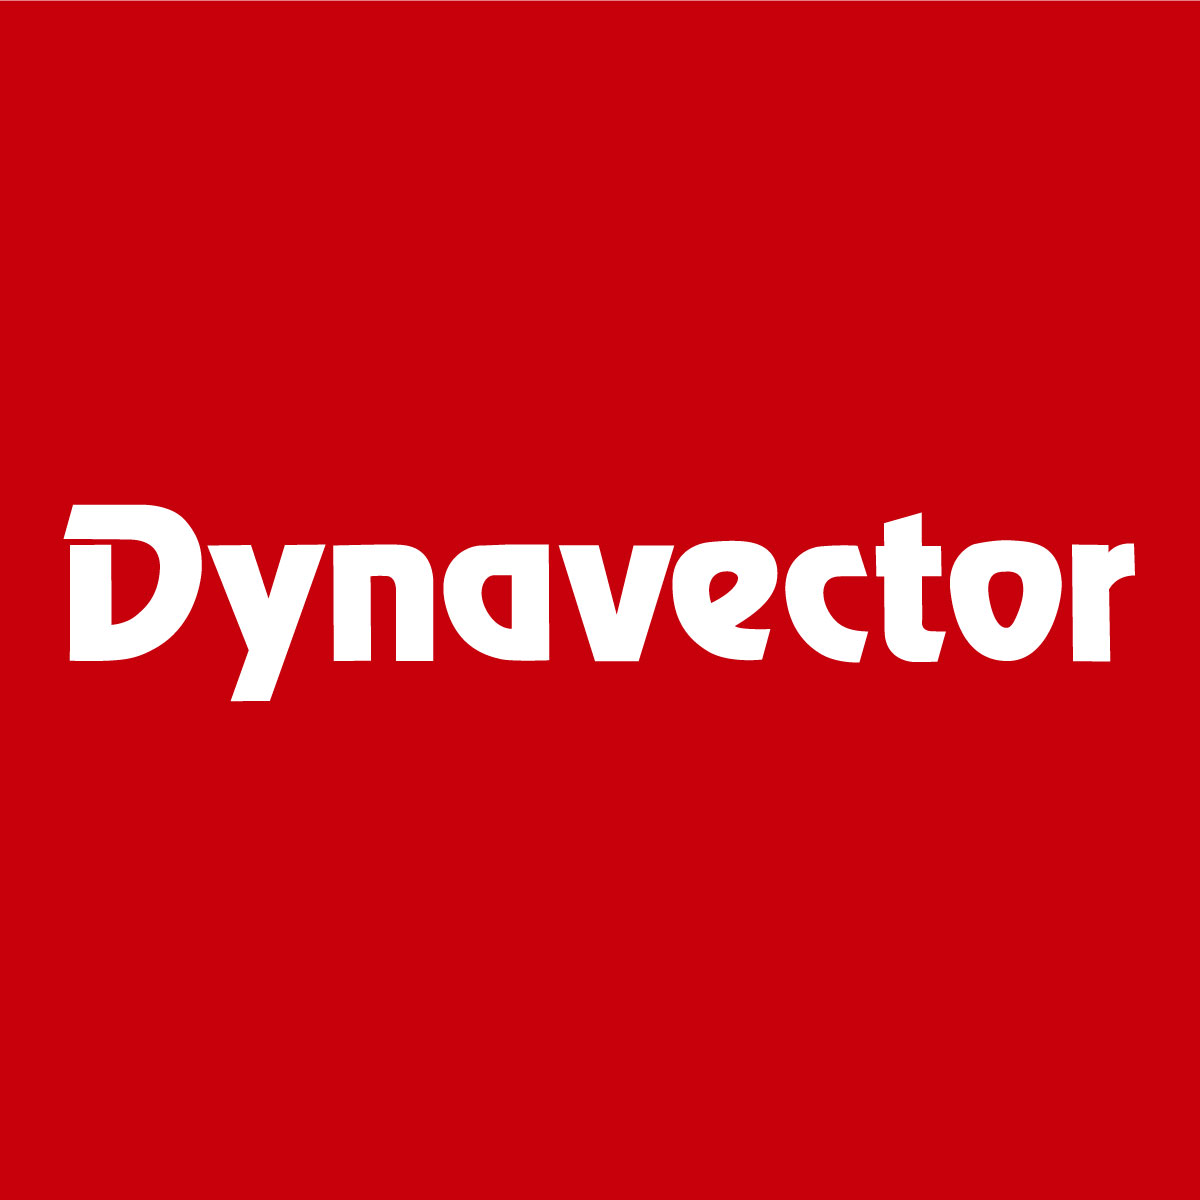 (c) Dynavector.com